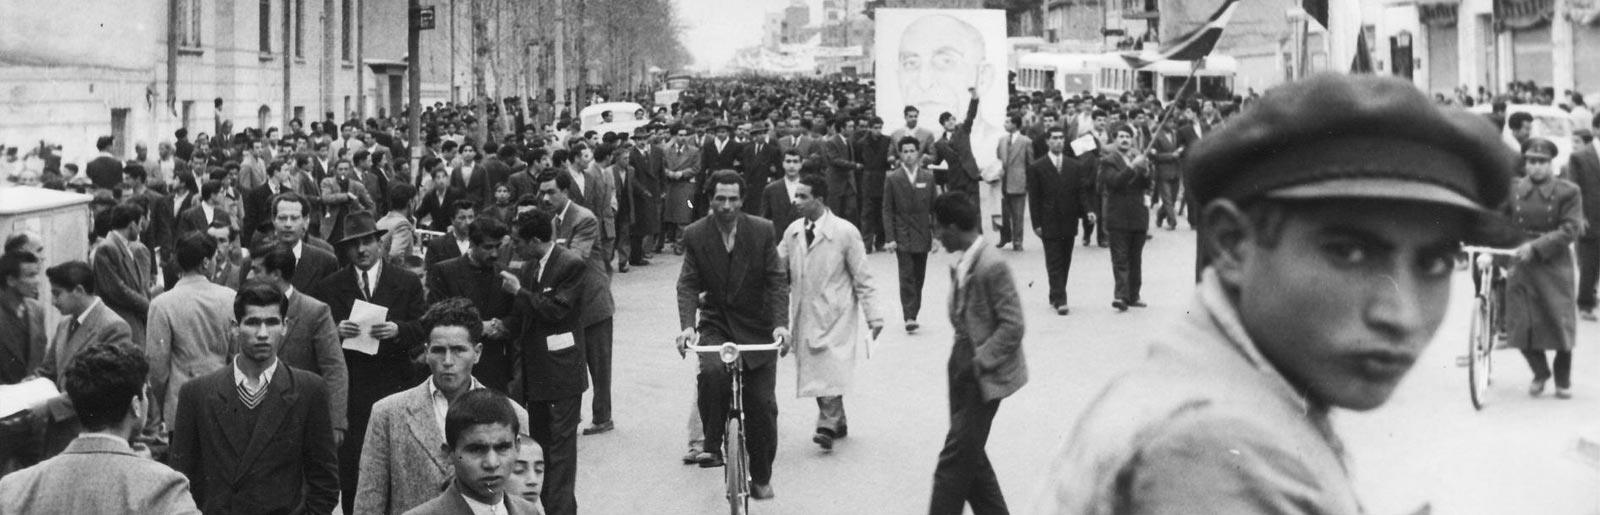 Busy Iranian Street, vintage photograph